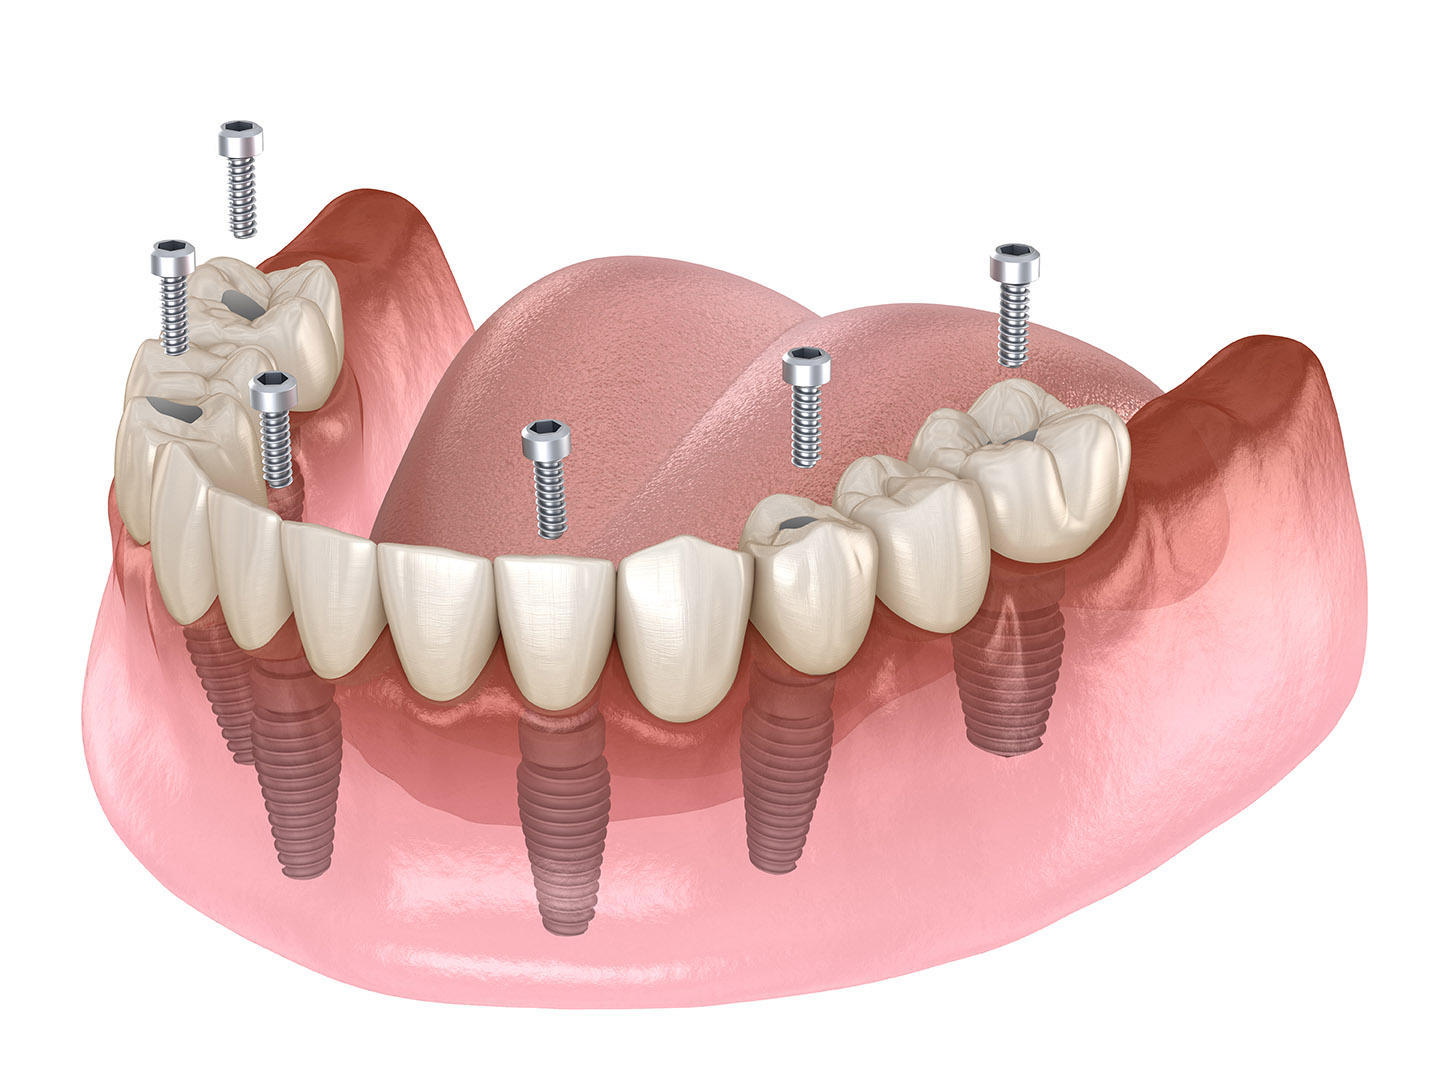 placing dental implants